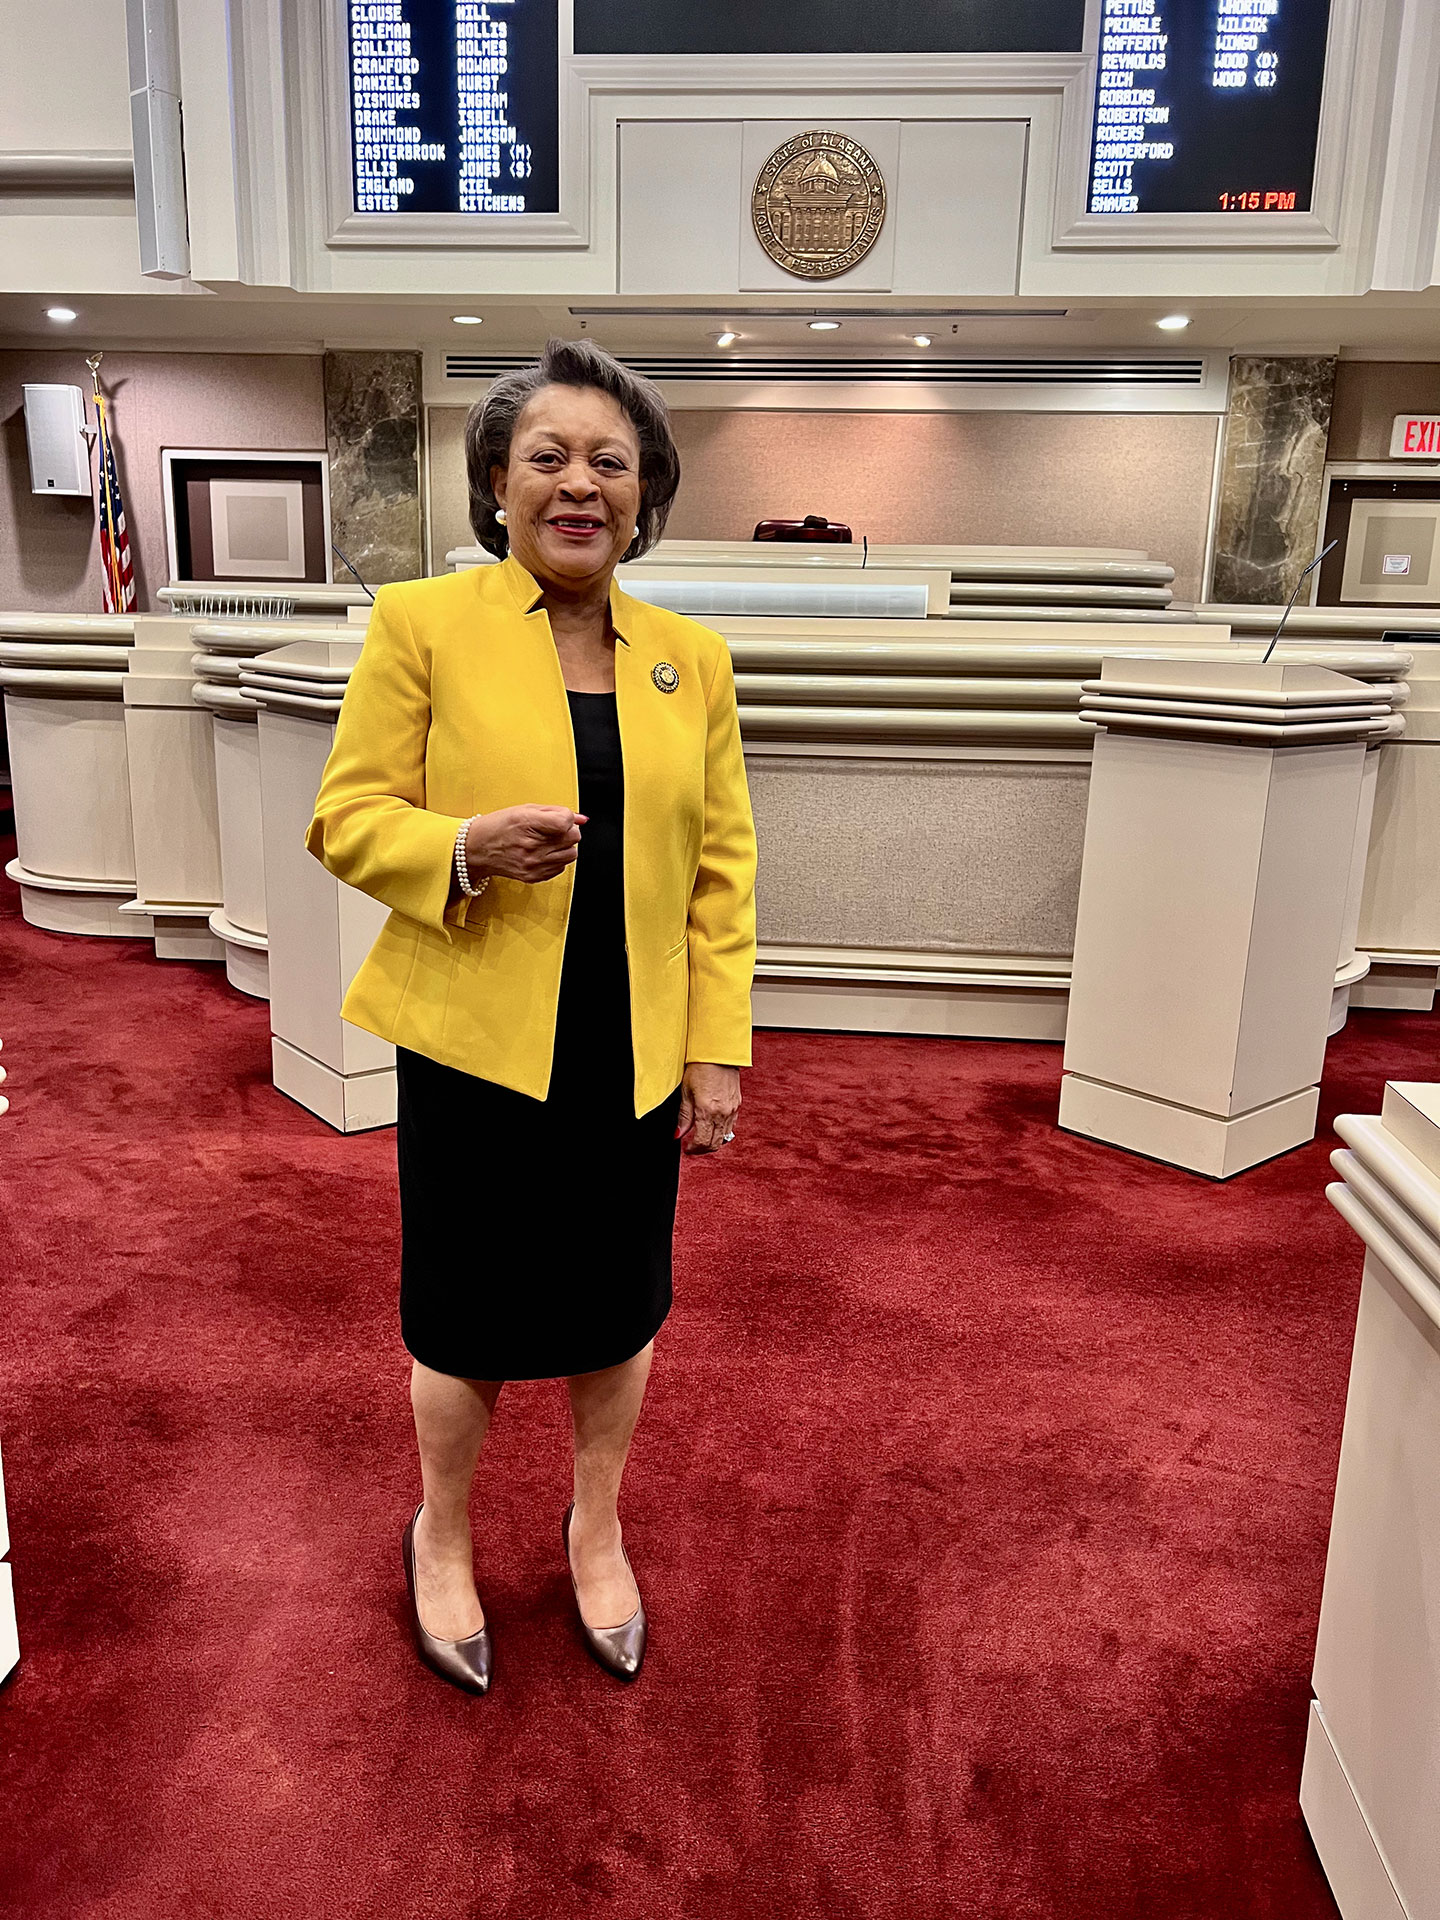 Ernestine Crowell in the Alabama House chamber (photograph by Elizabeth DeRamus)